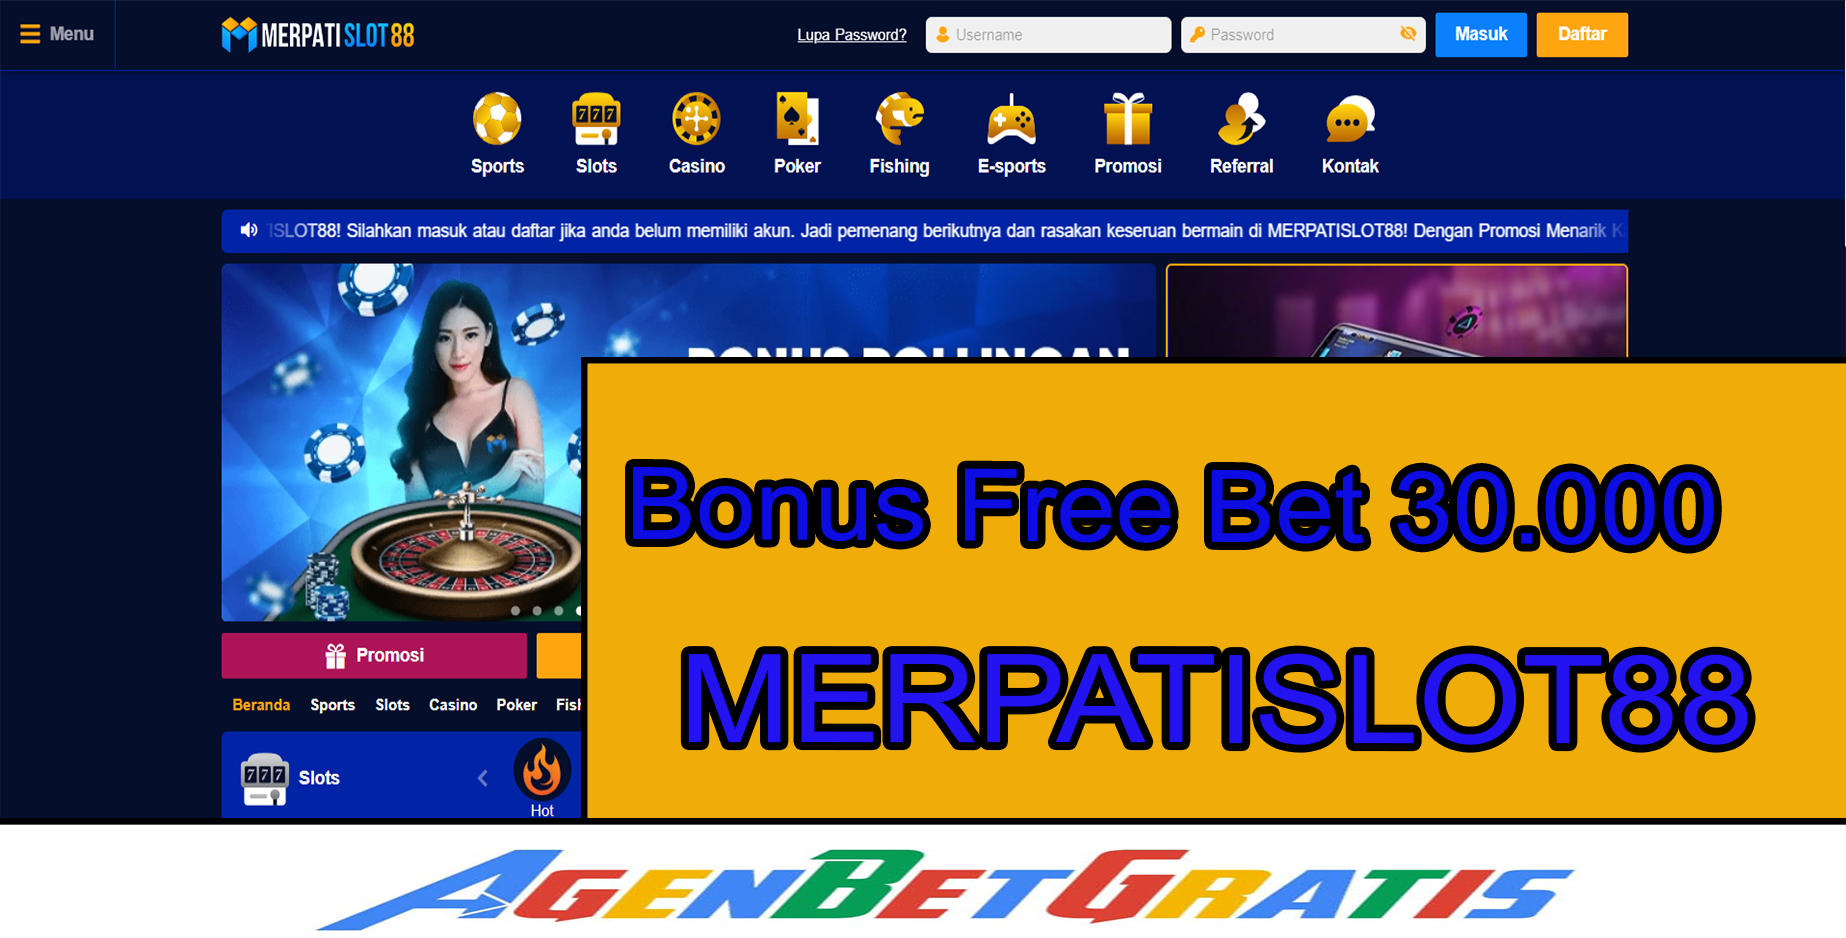 MERPATISLOT88 - Bonus FreeBet 30.000